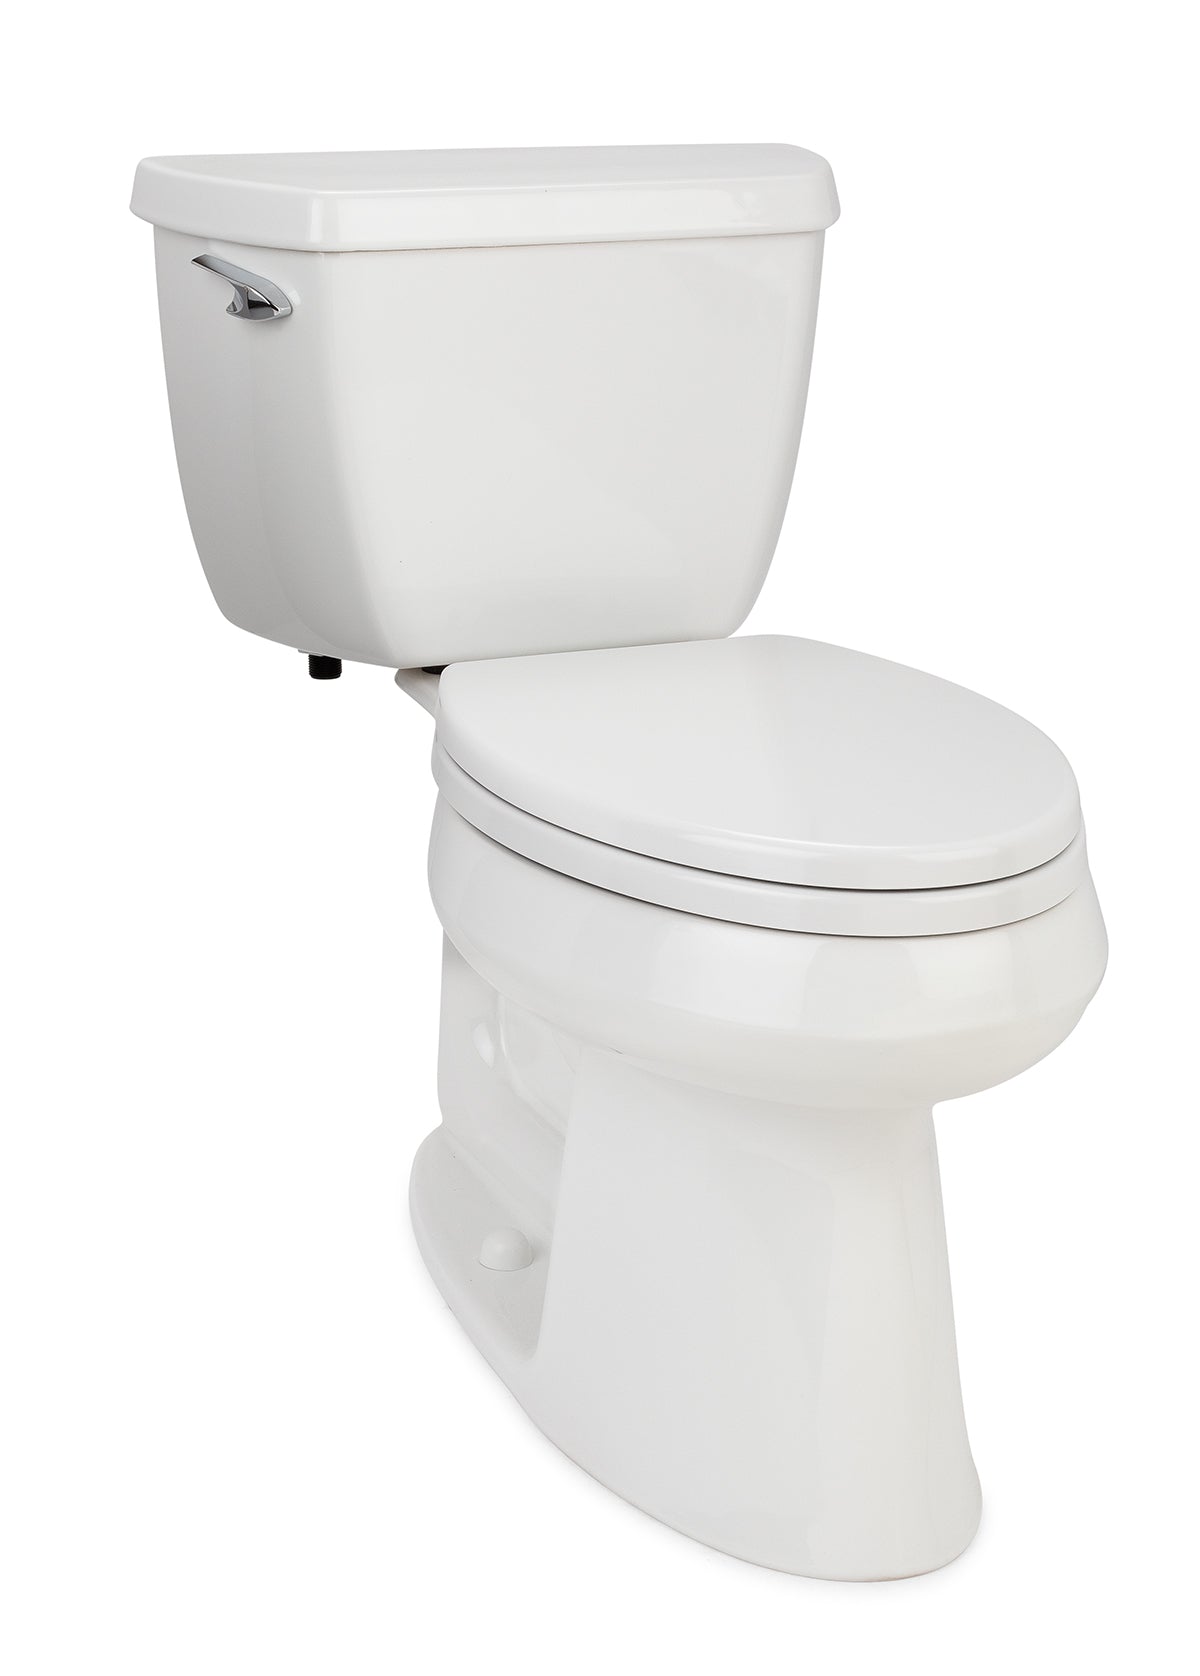 Bath Royale MasterSuite Toilet Seat Mounted